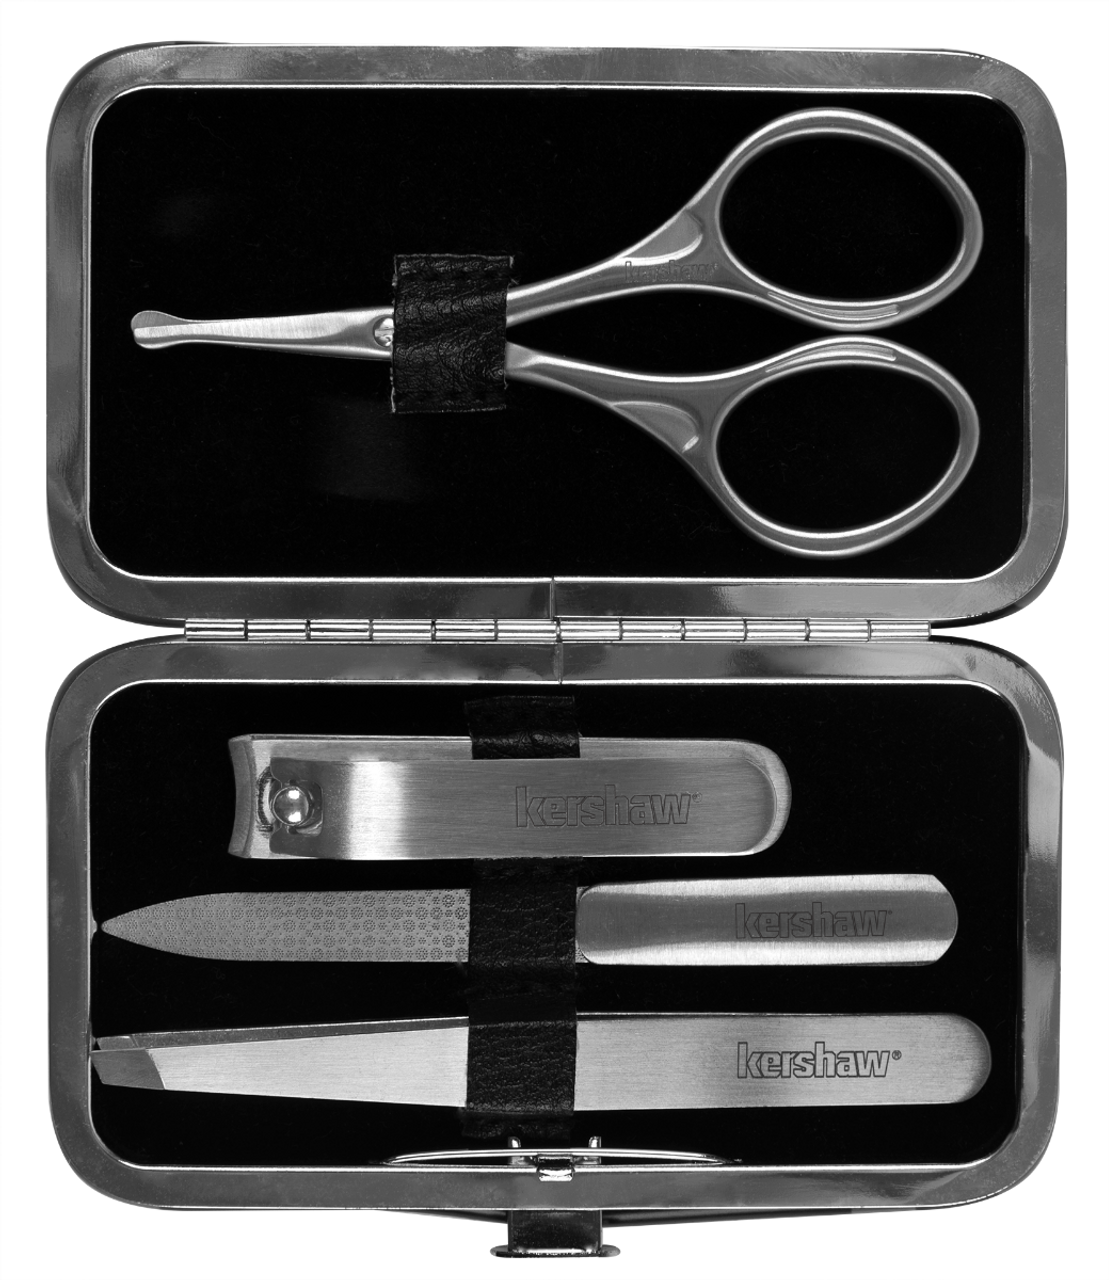 Kershaw Manicure Kit KMCURE - 4pc Set